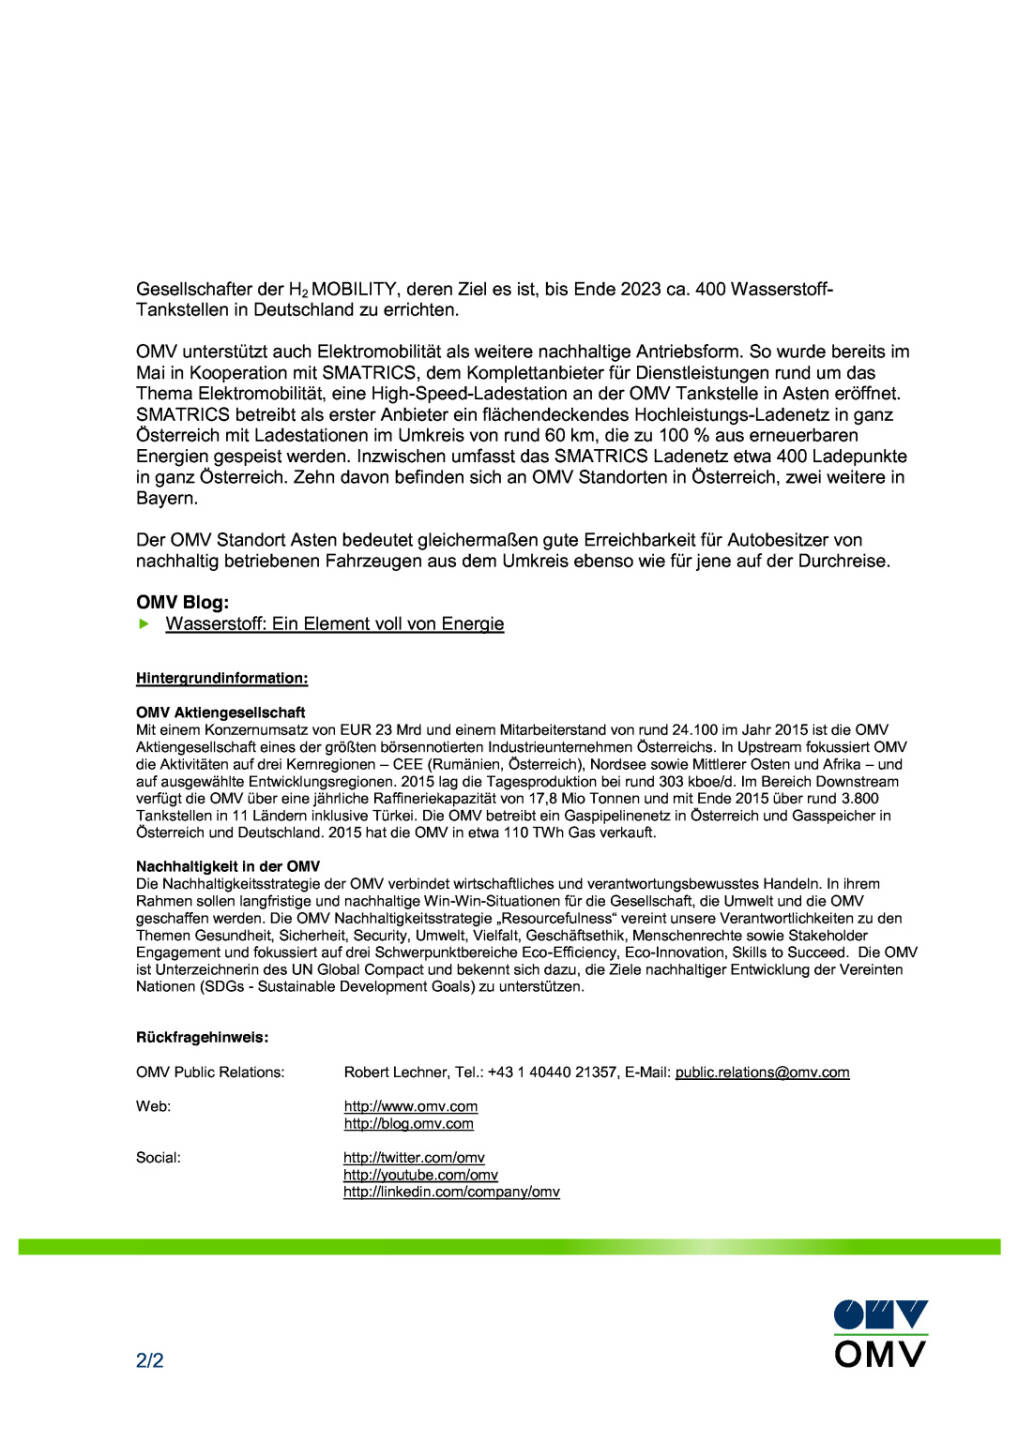 OMV eröffnet Wasserstoff-Tankstelle in Asten bei Linz, Seite 2/2, komplettes Dokument unter http://boerse-social.com/static/uploads/file_1771_omv_eröffnet_wasserstoff-tankstelle_in_asten_bei_linz.pdf